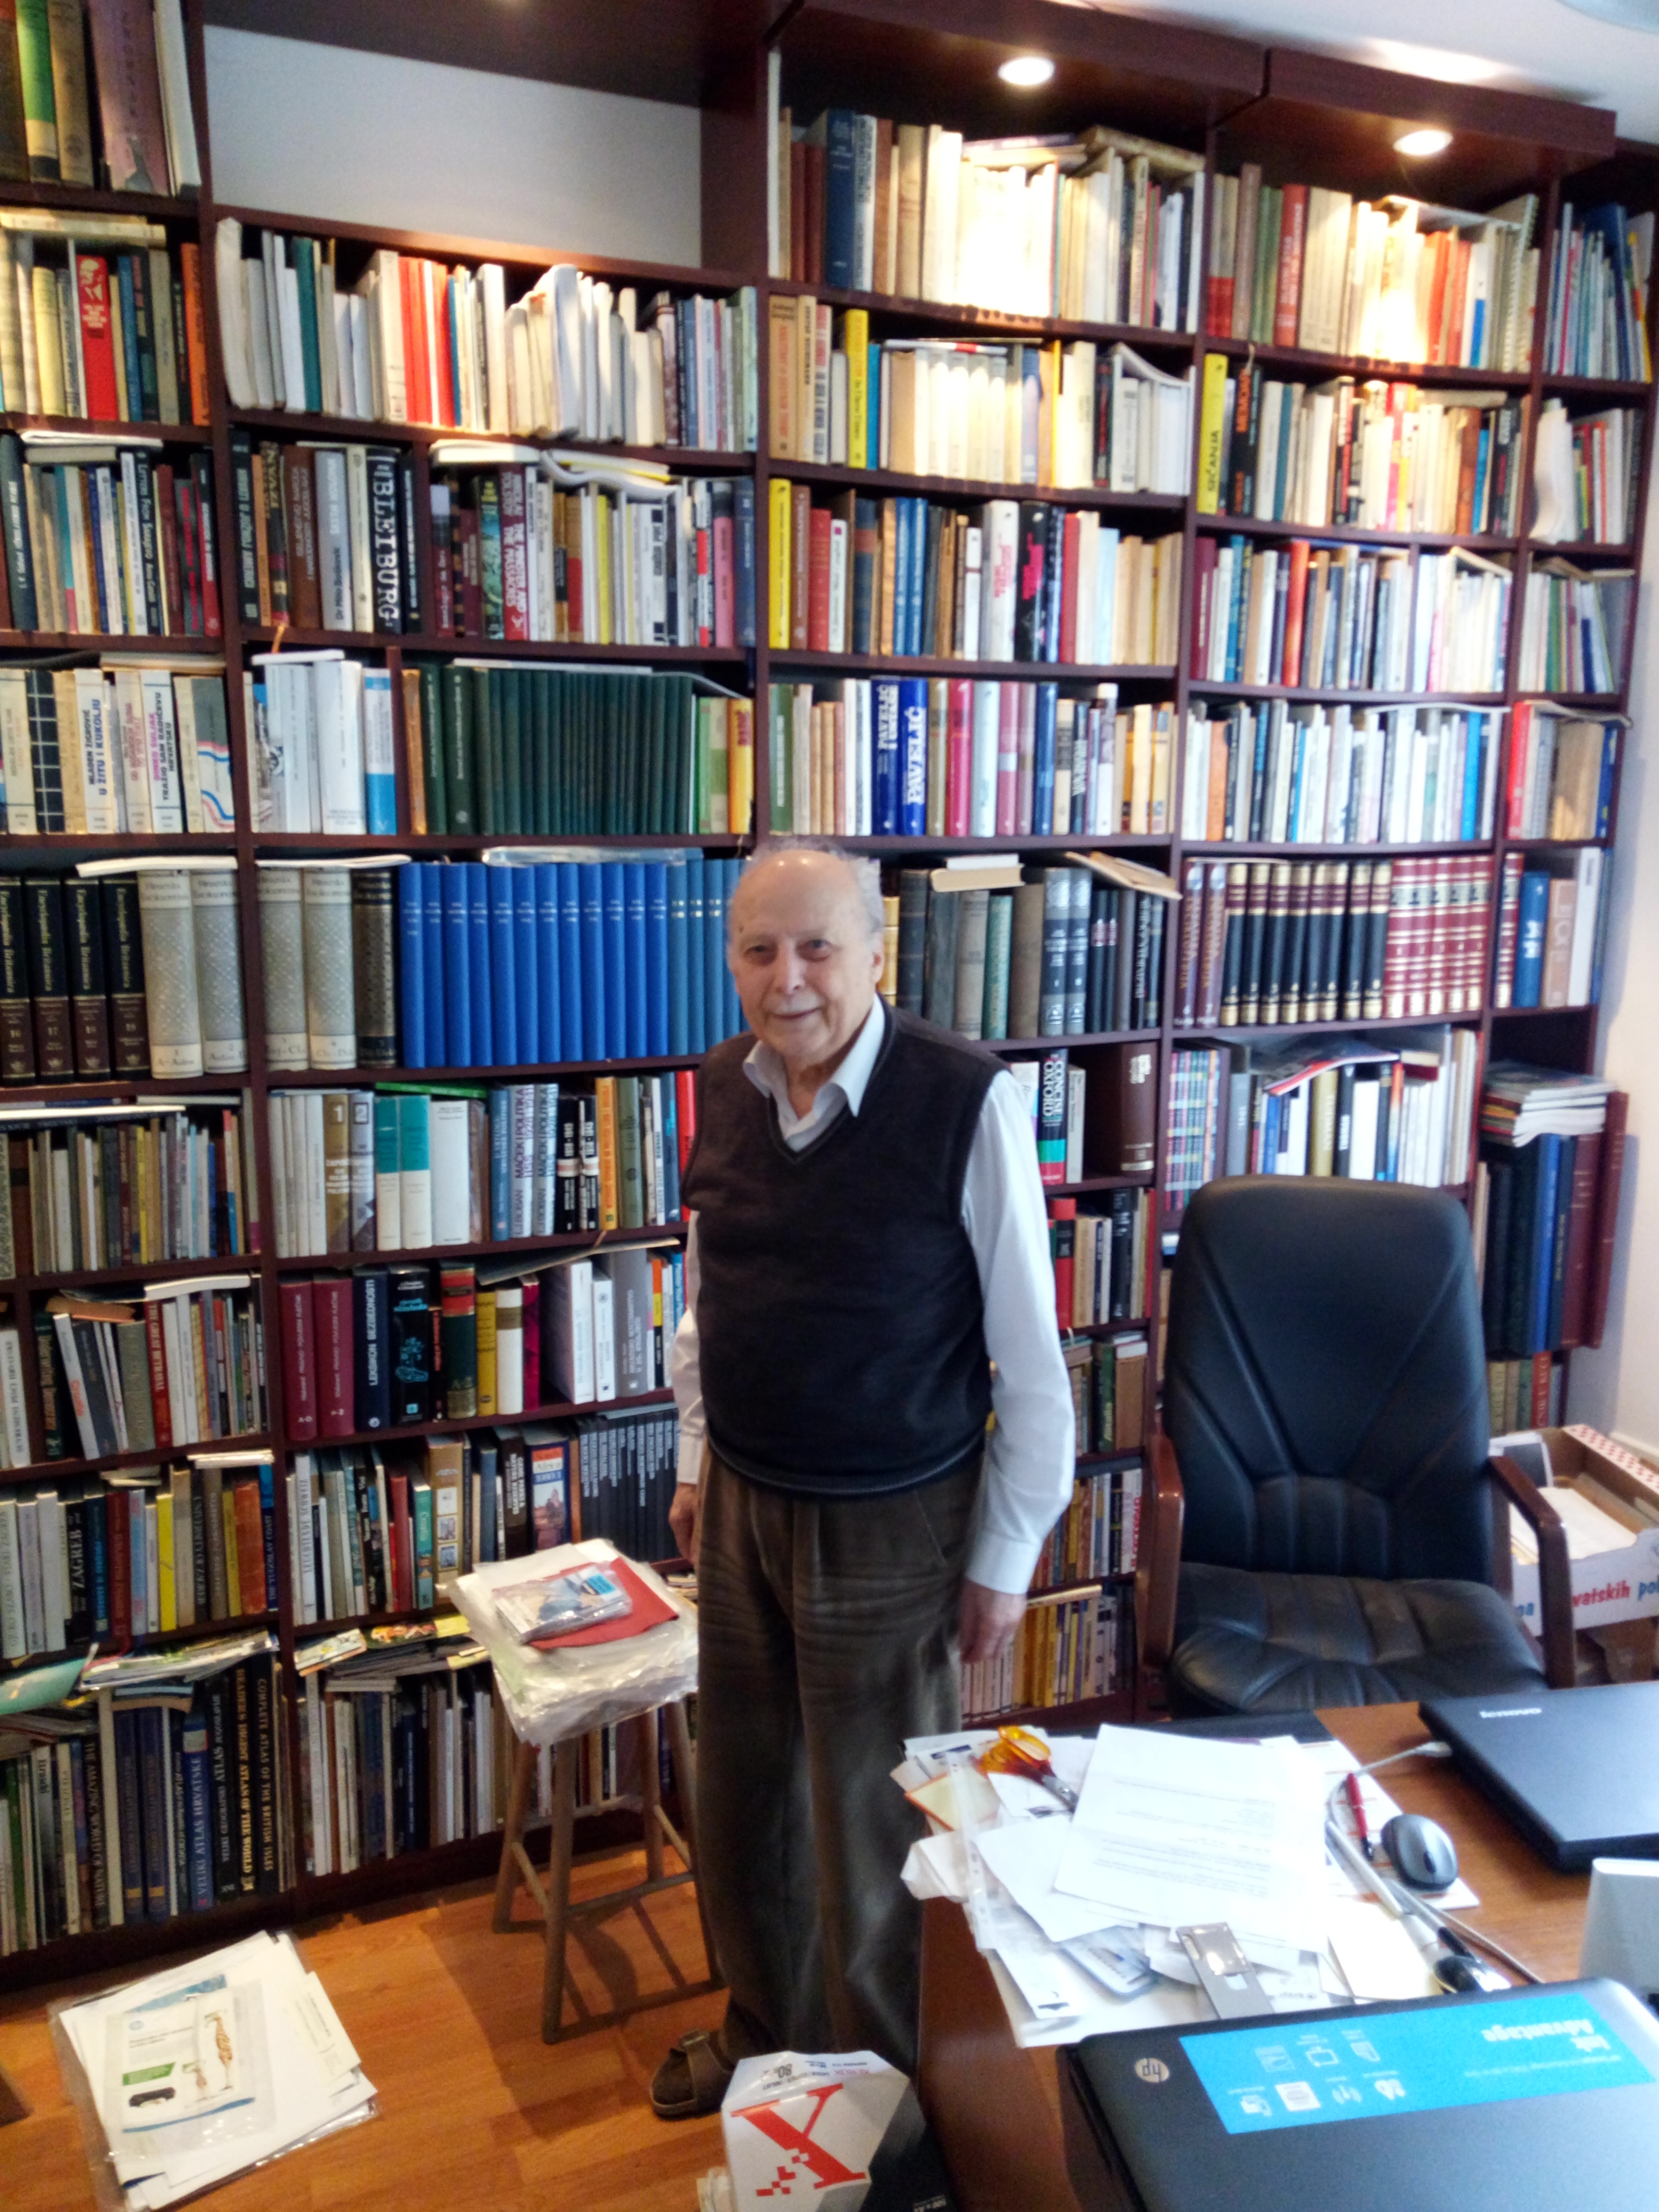 Jakša Kušan in his study (5-4-2018)